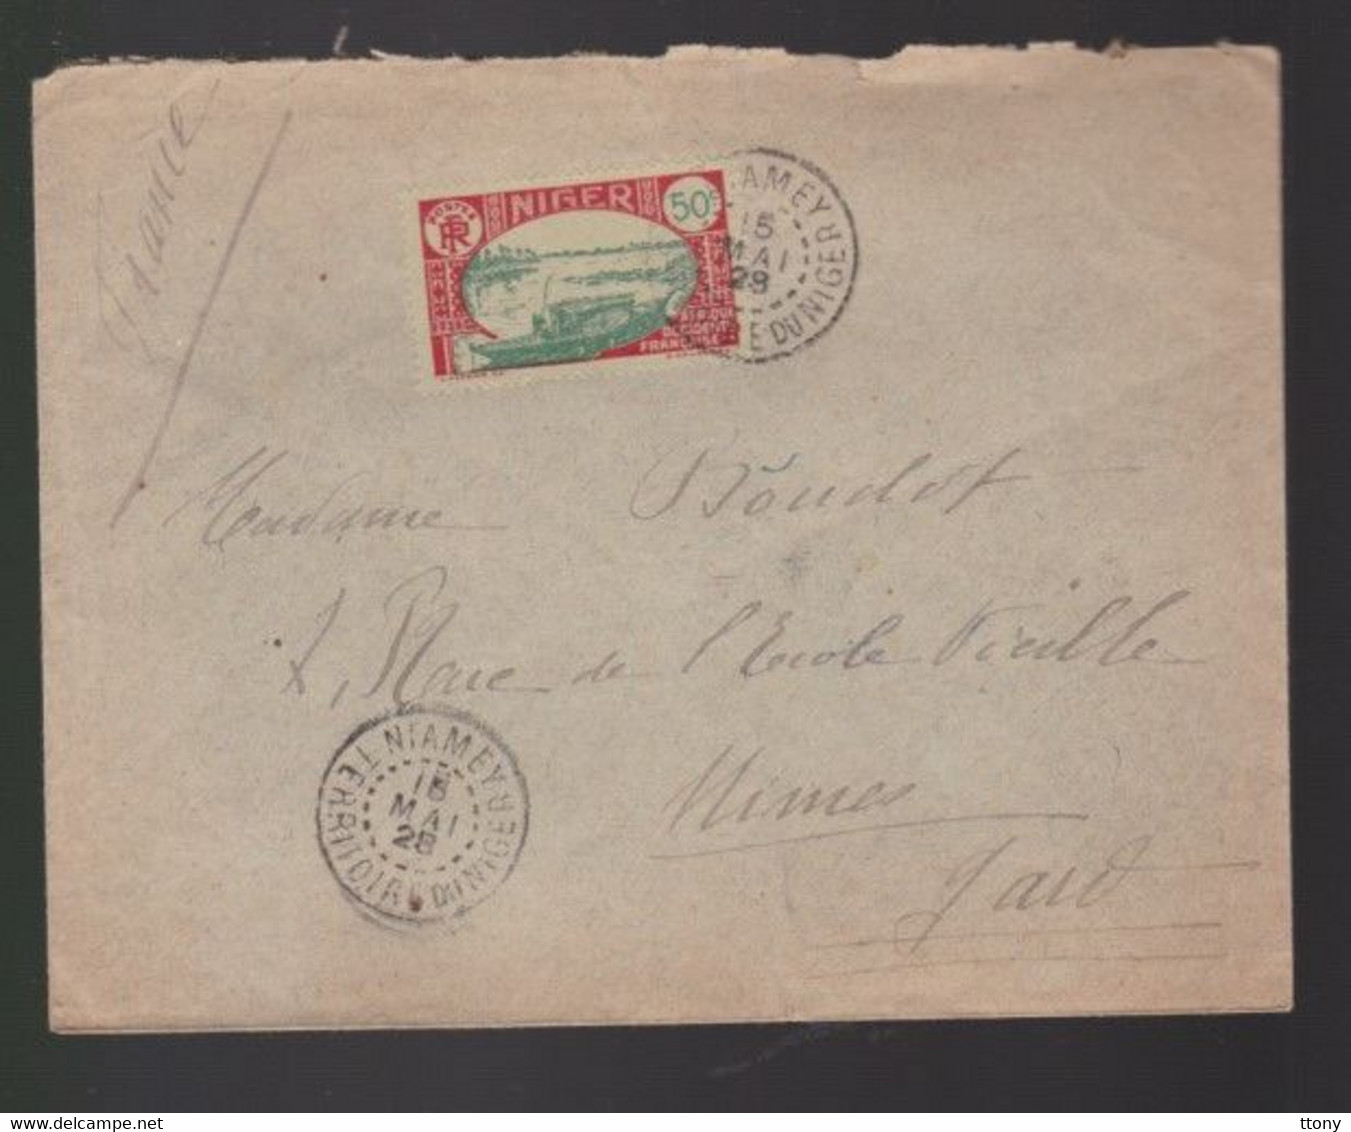 1  Timbre    50 C  Sur Enveloppe    Niamey   Territoire Du Niger Année 1928   Destination  Nîmes Gard - Briefe U. Dokumente